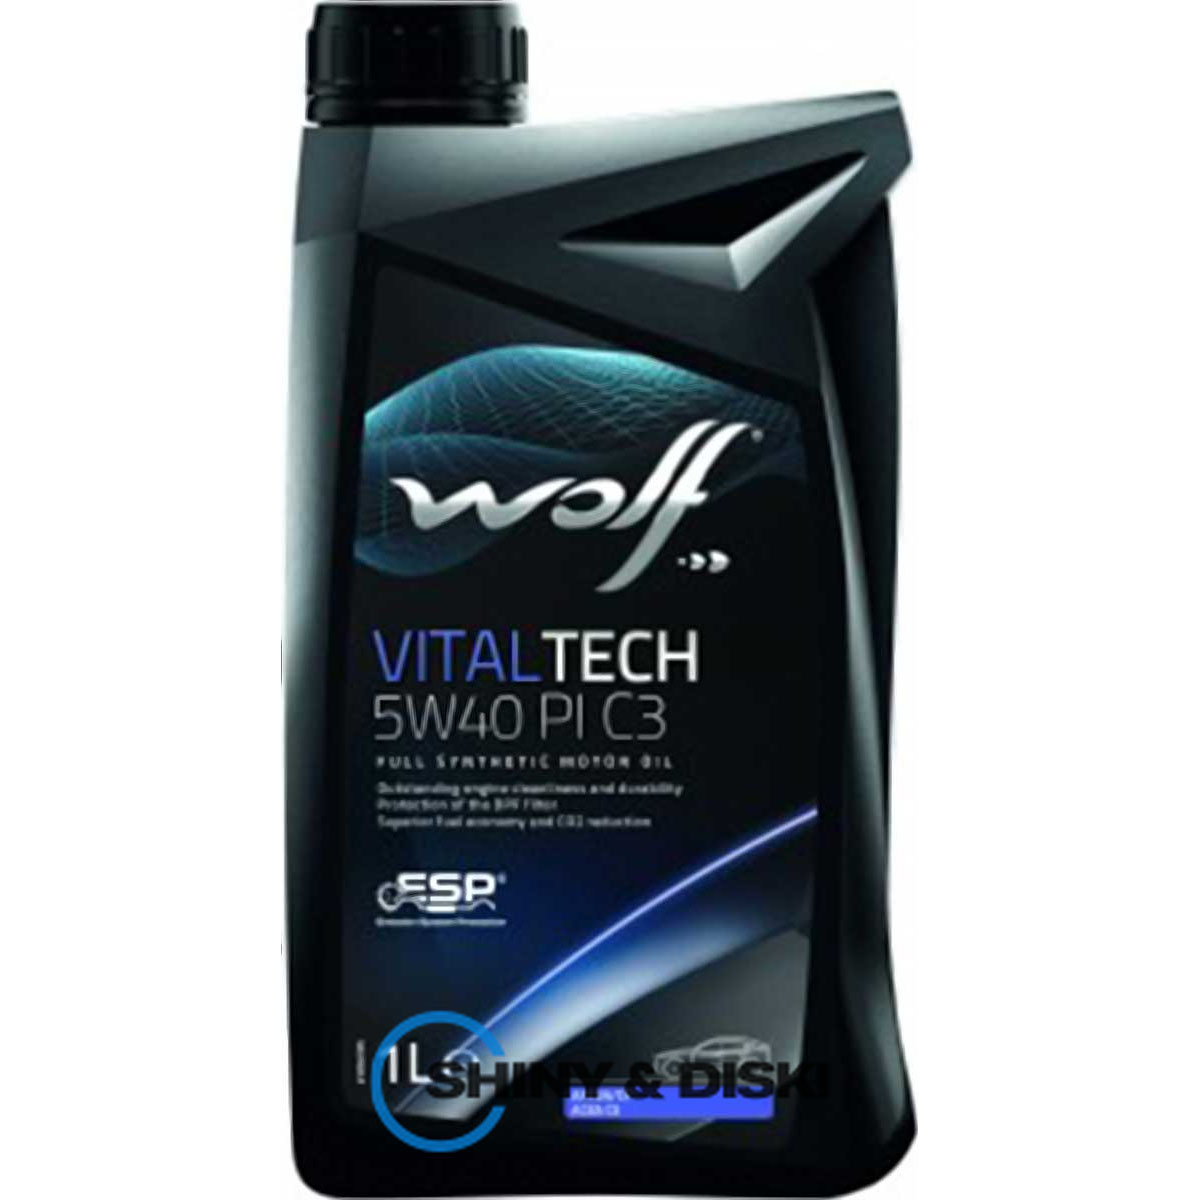 wolf vitaltech 5w-40 pi c3 (1л)